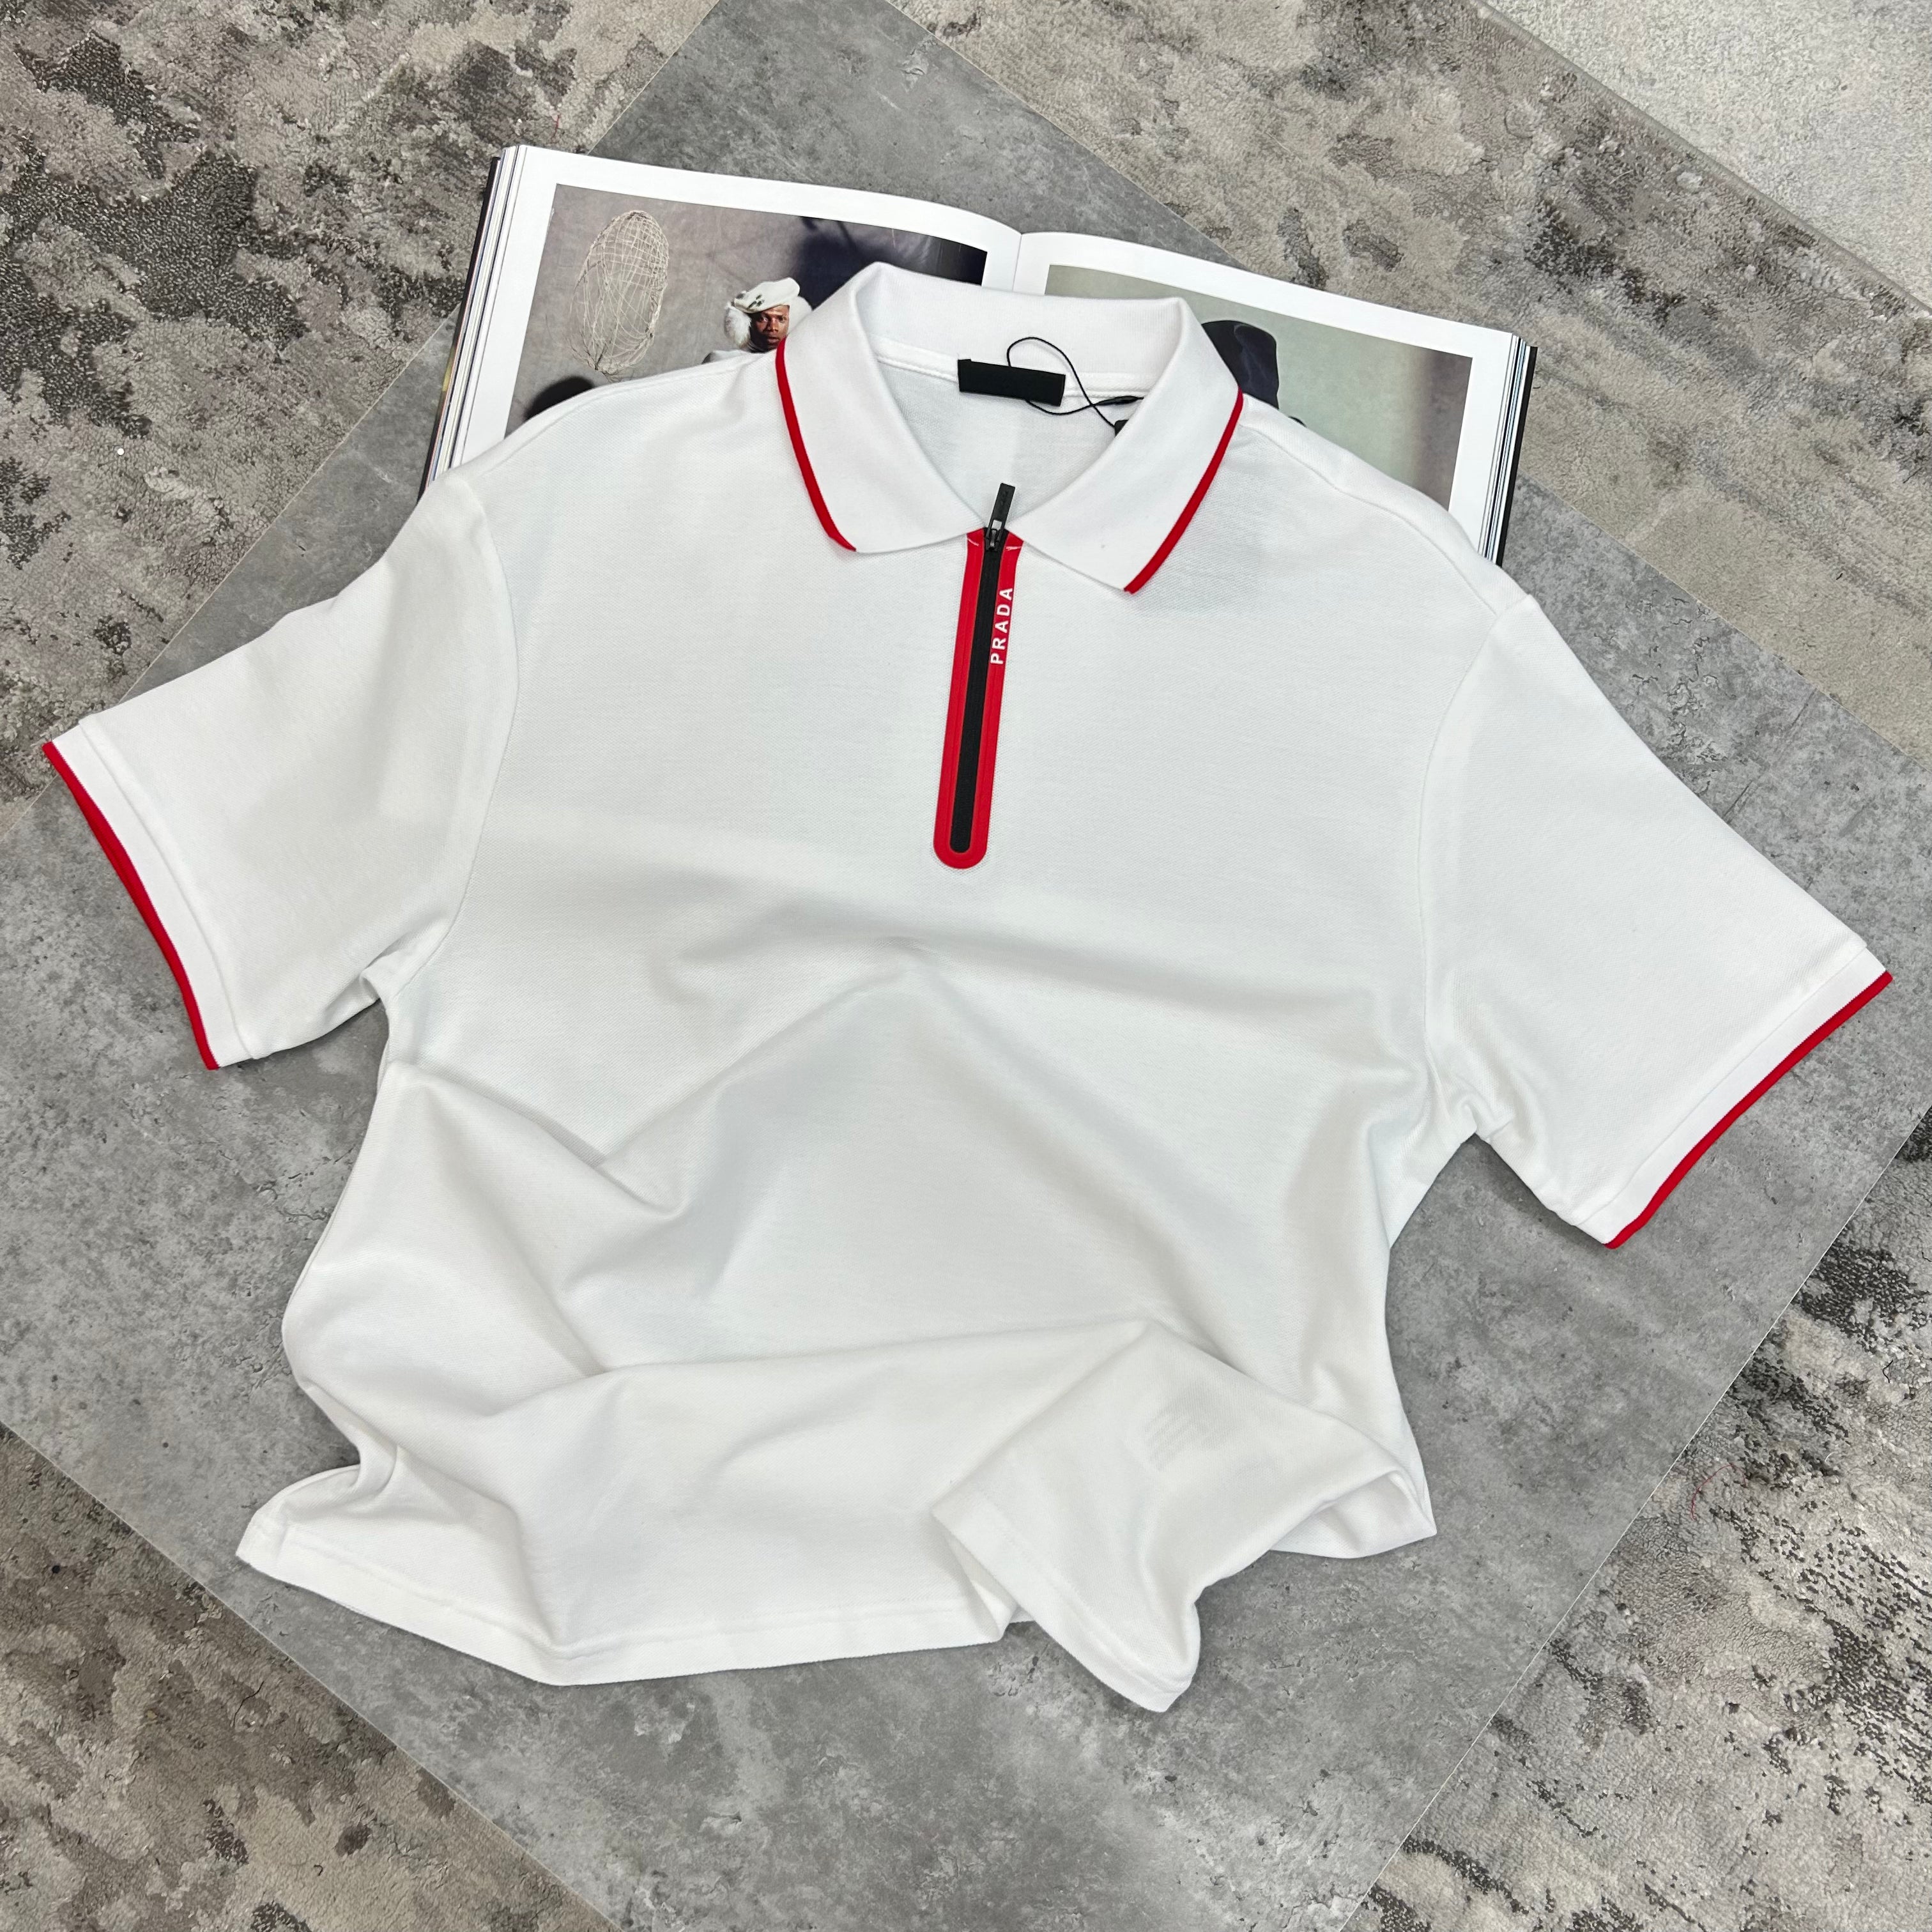 Louis Vuitton white Equipe LV Polo Shirt